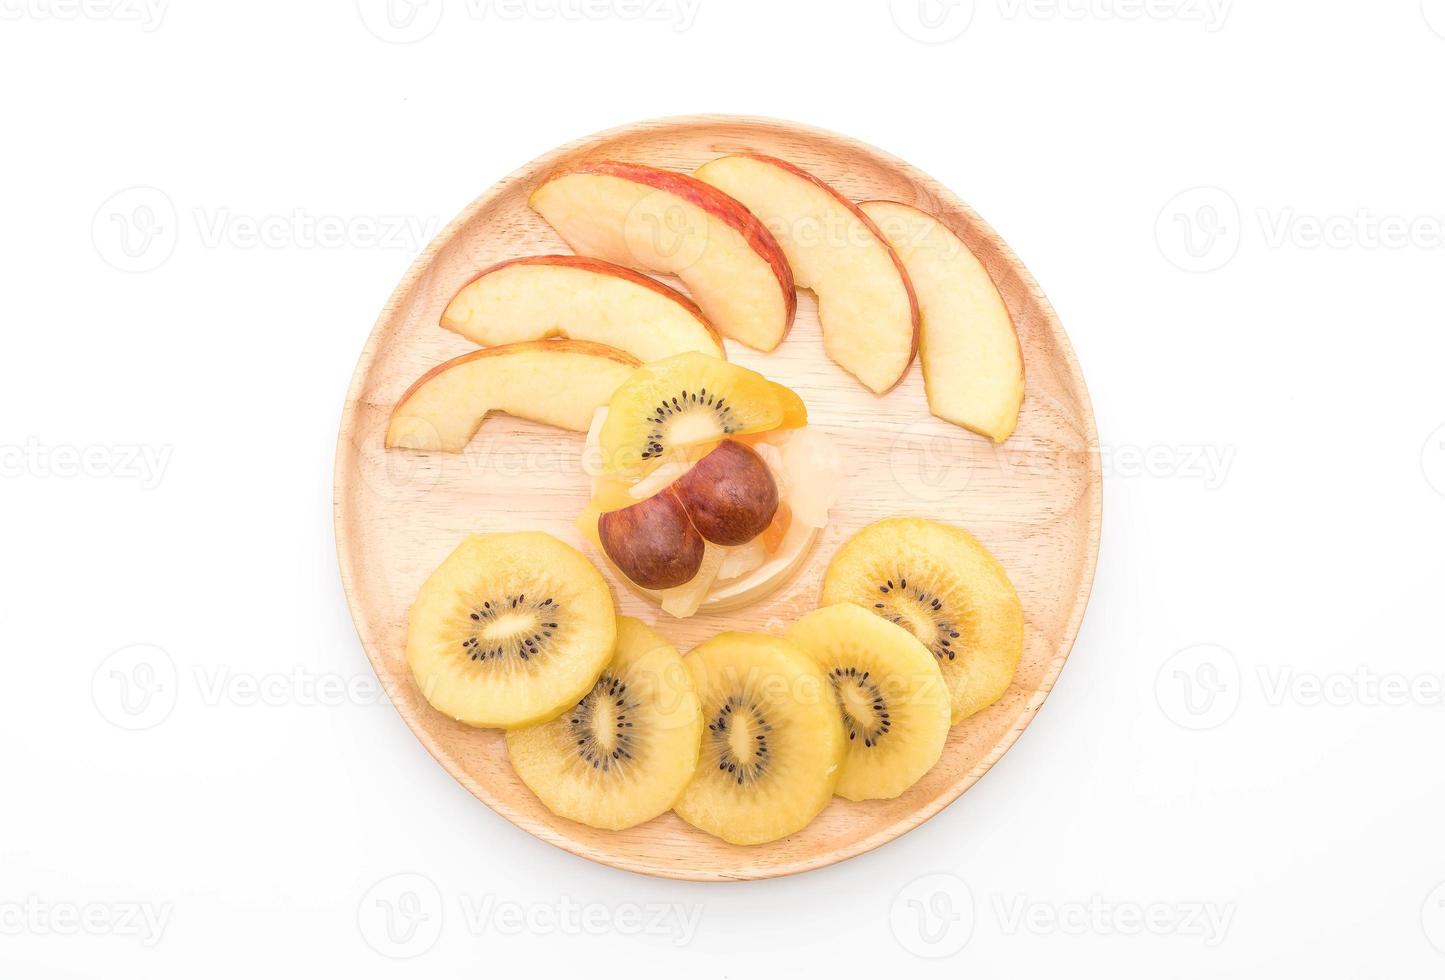 Pudding fruits with kiwi and apple on white background photo